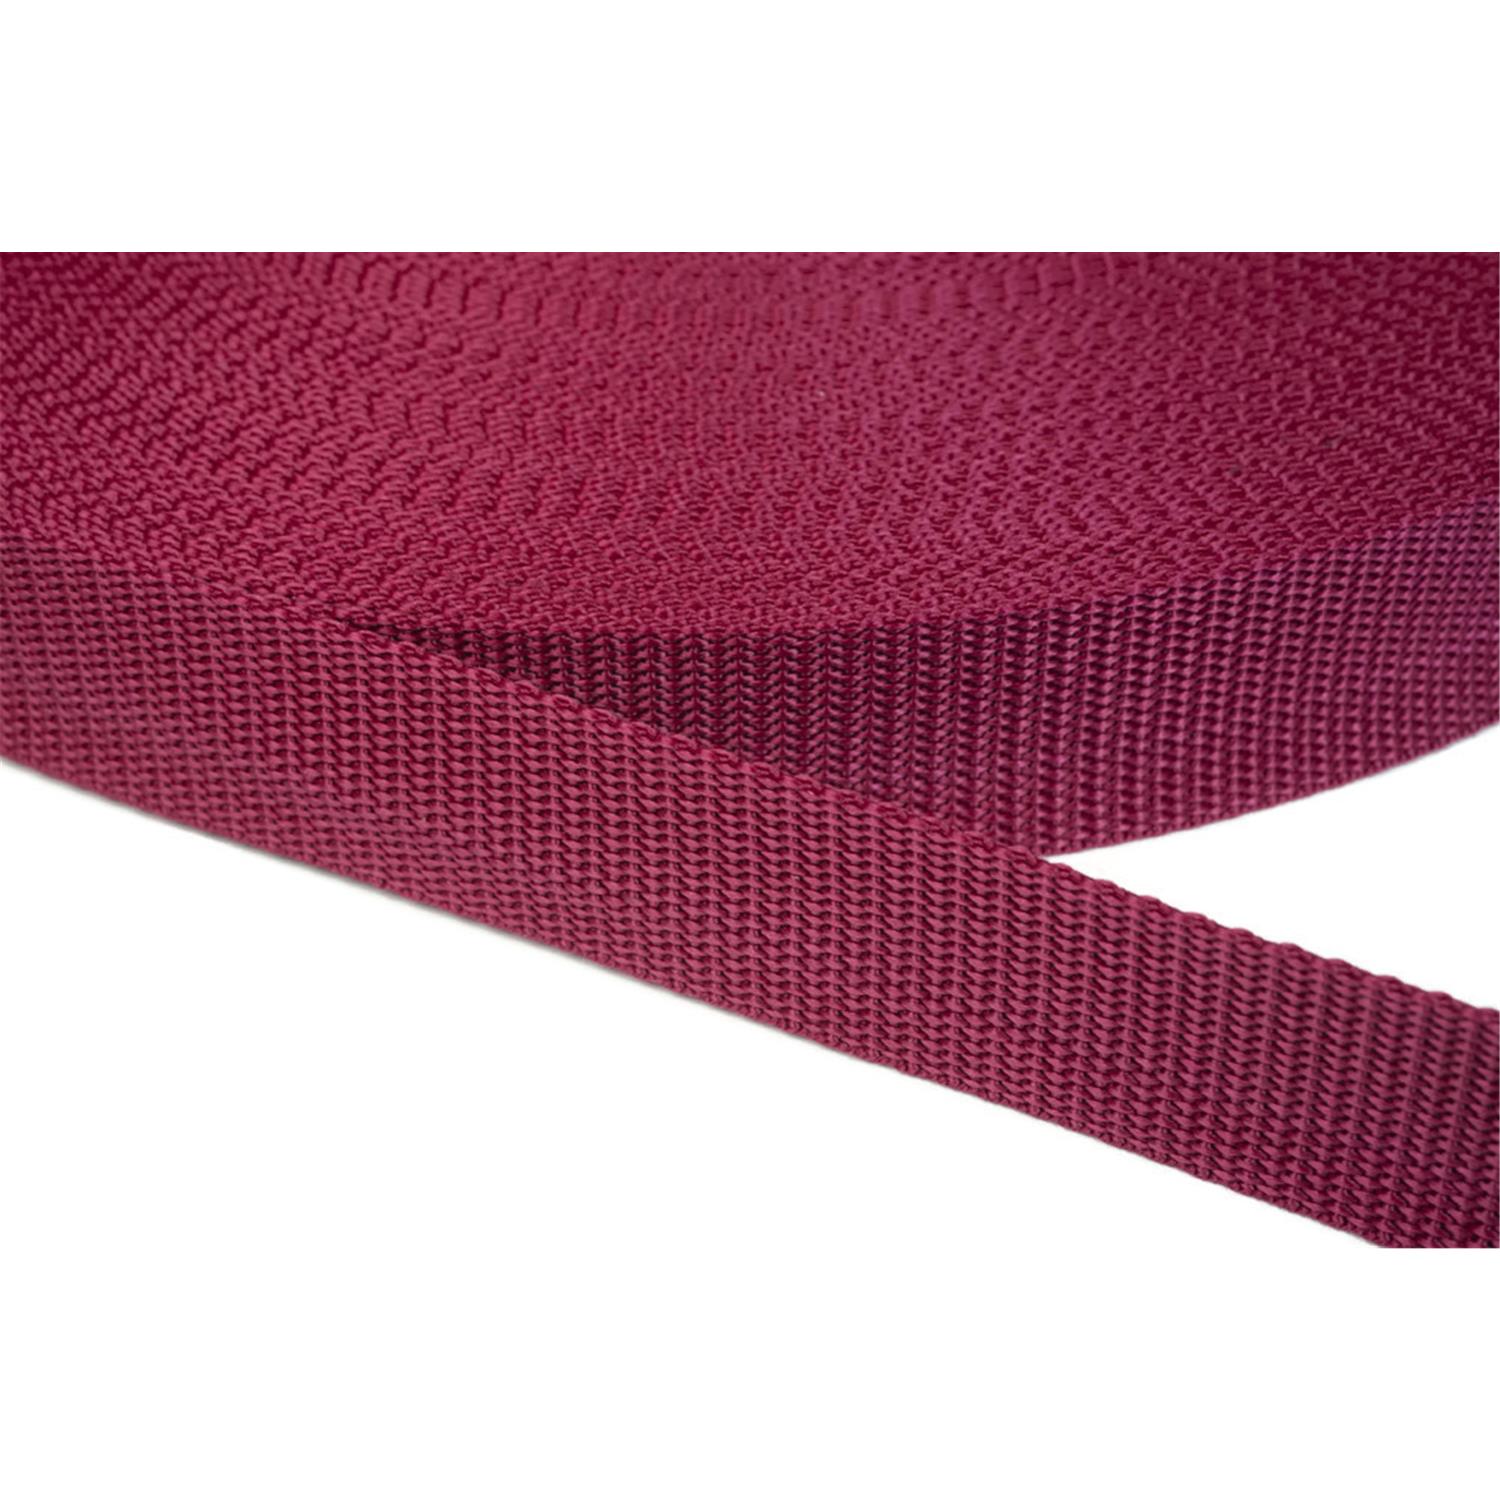 Gurtband 15mm breit aus Polypropylen in 41 Farben 21 - dunkelrot 12 Meter